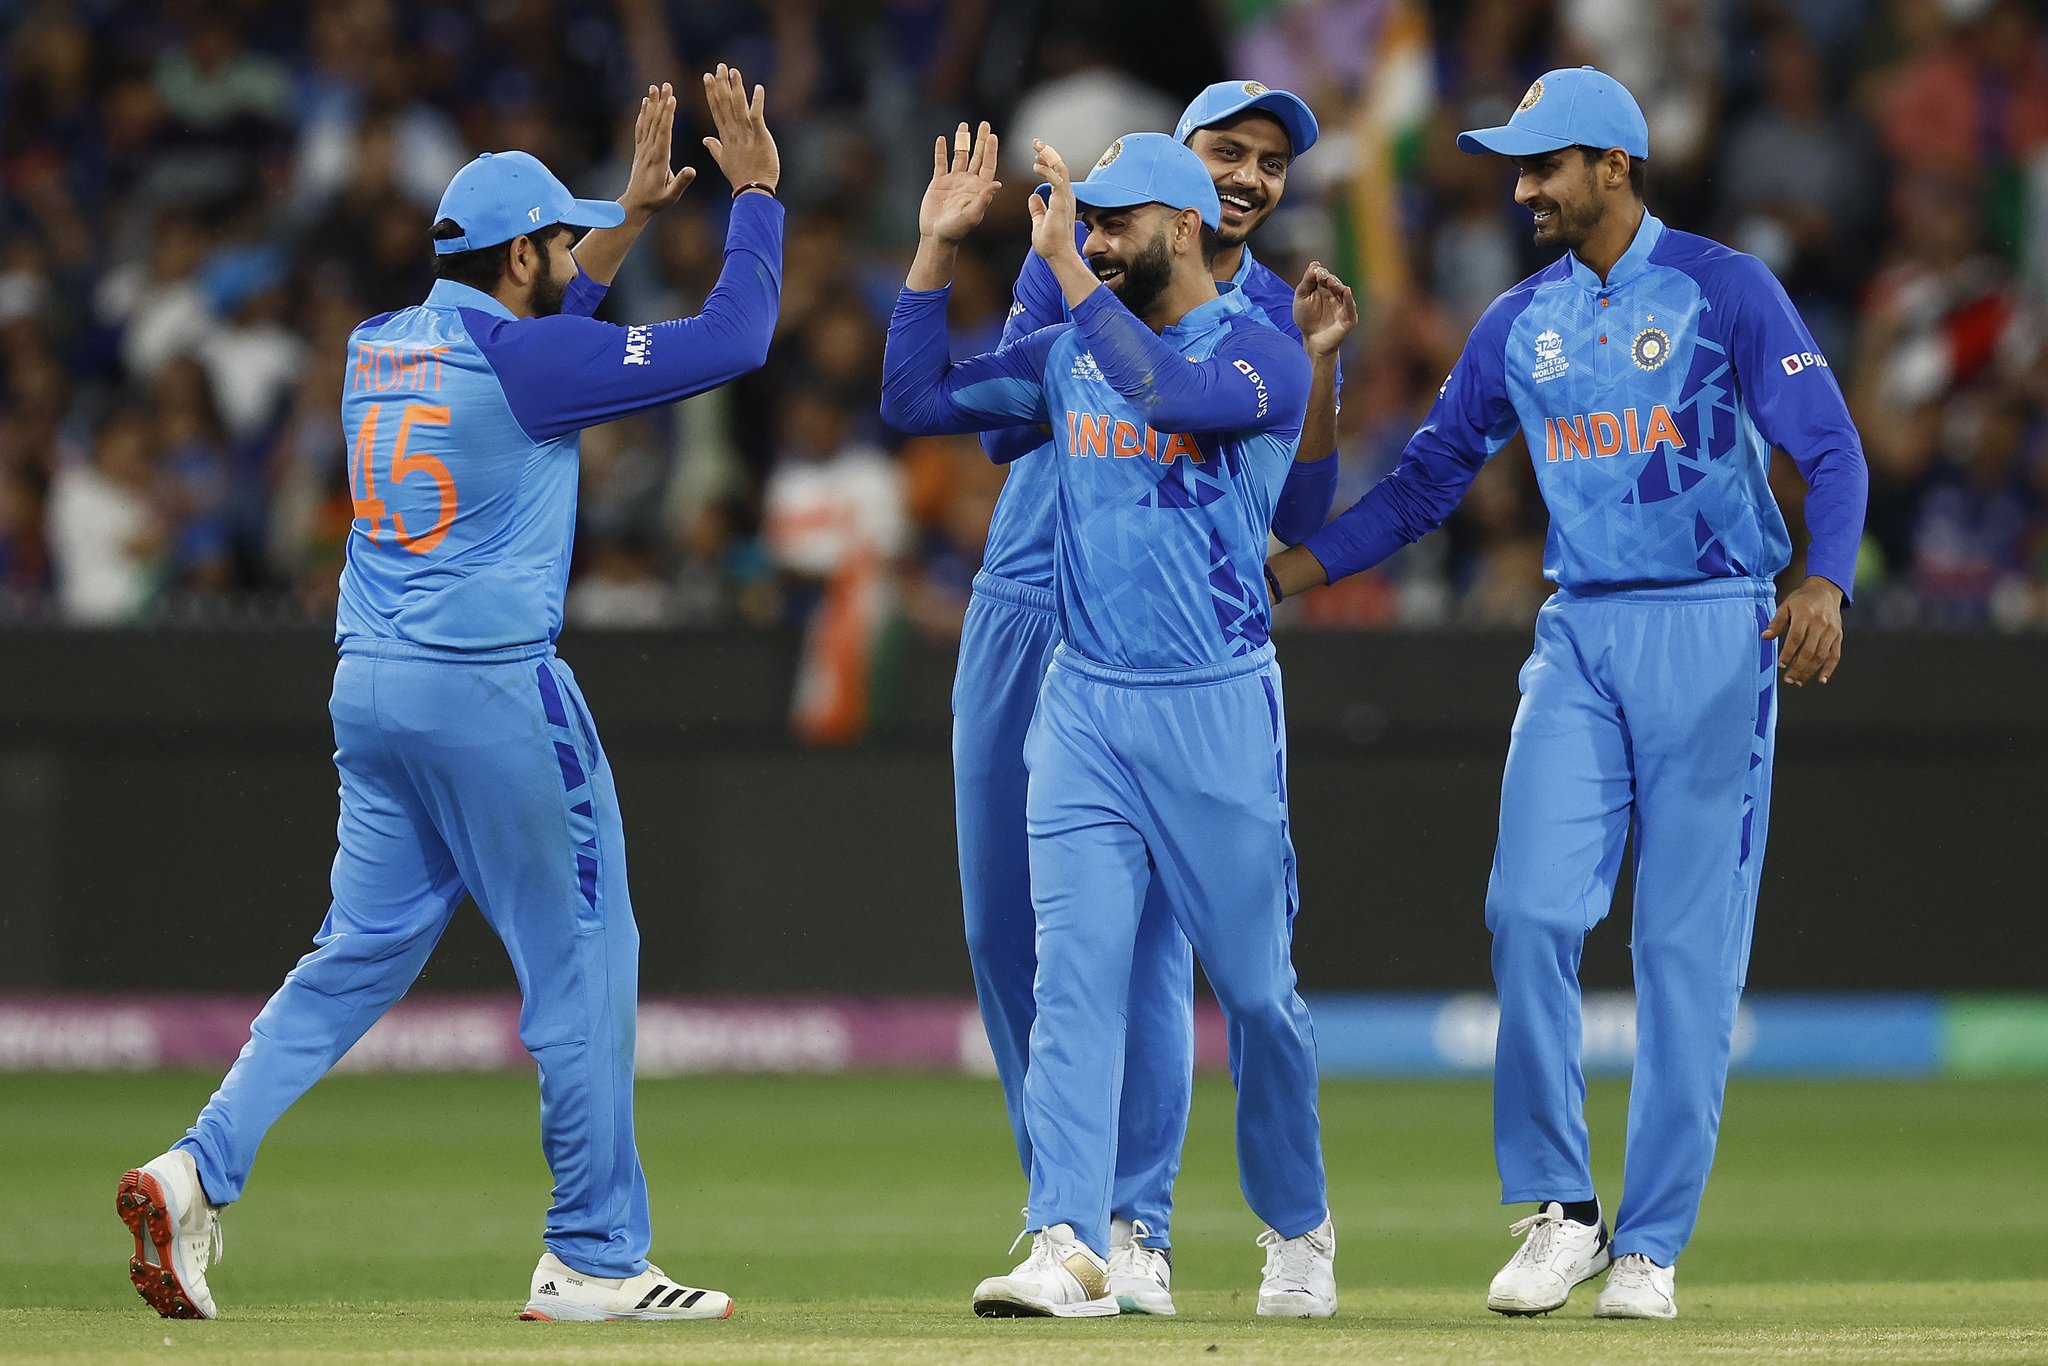 IND vs BAN: After returning to form Virat Kohli eyes 72nd century to go past Ricky Ponting, Check Kohli's MIND-BOGGLING stats vs Bangladesh, India vs Bangladesh 